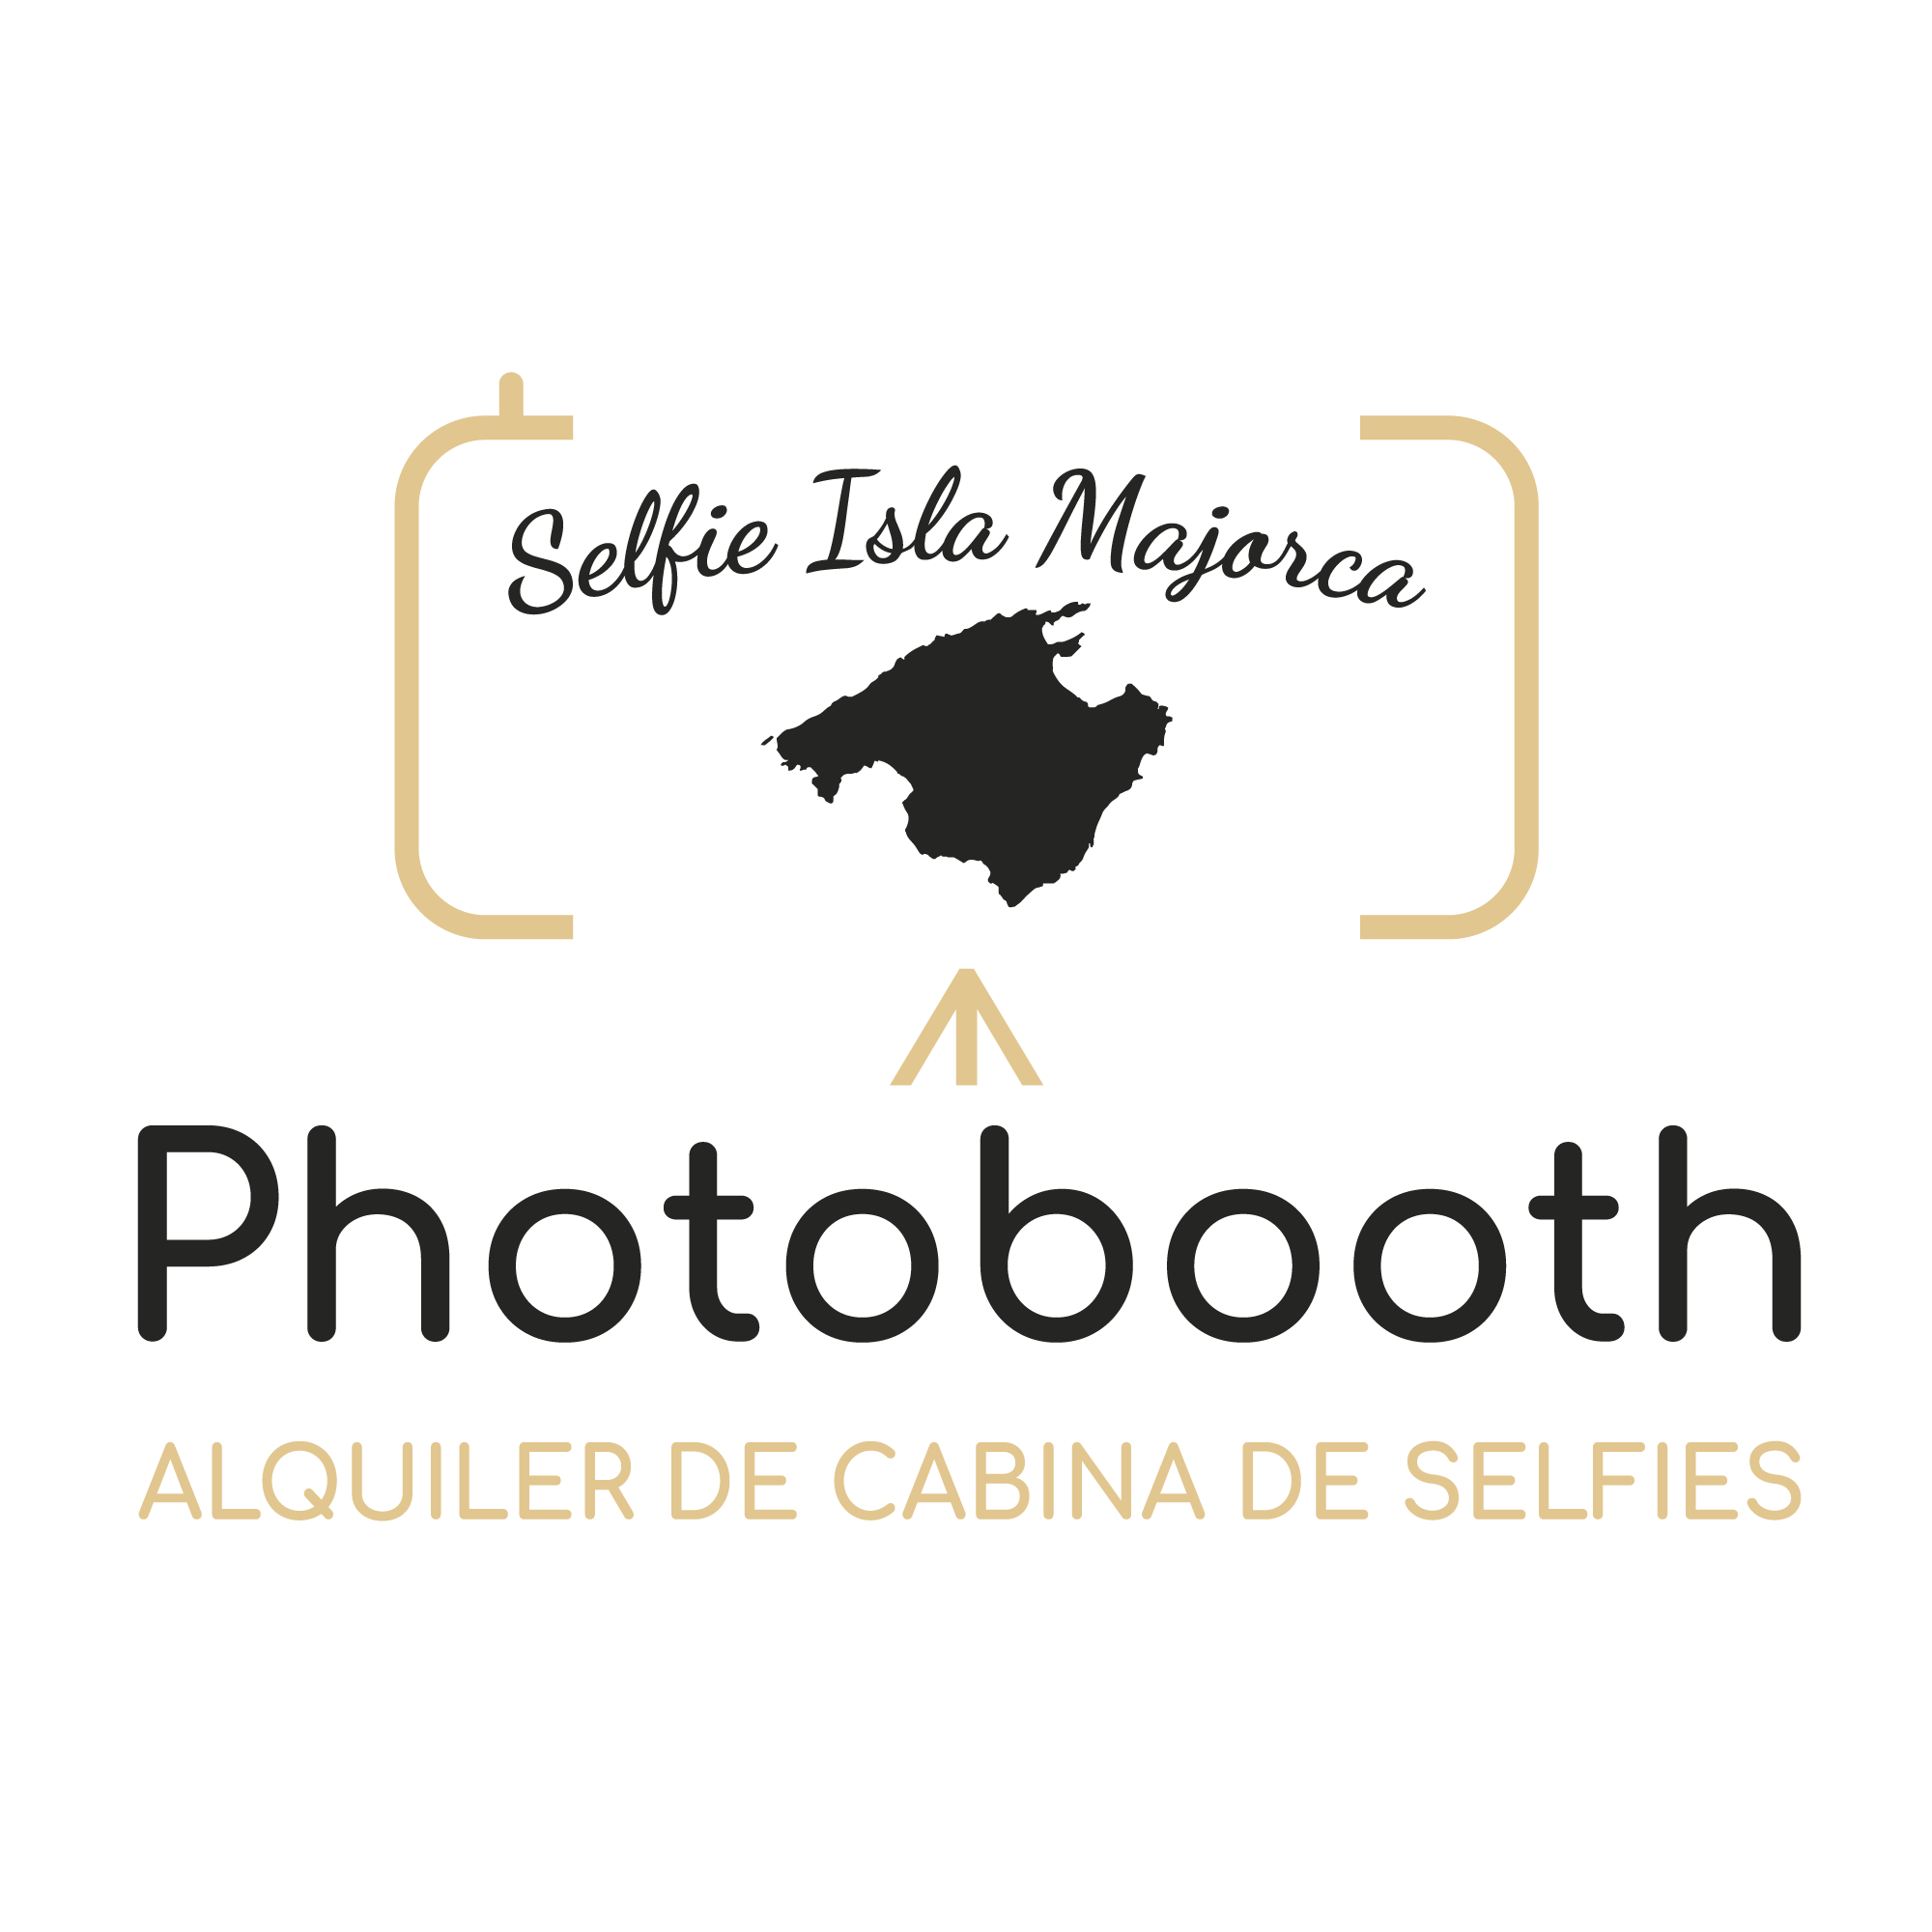 Selfie Isla Majorca